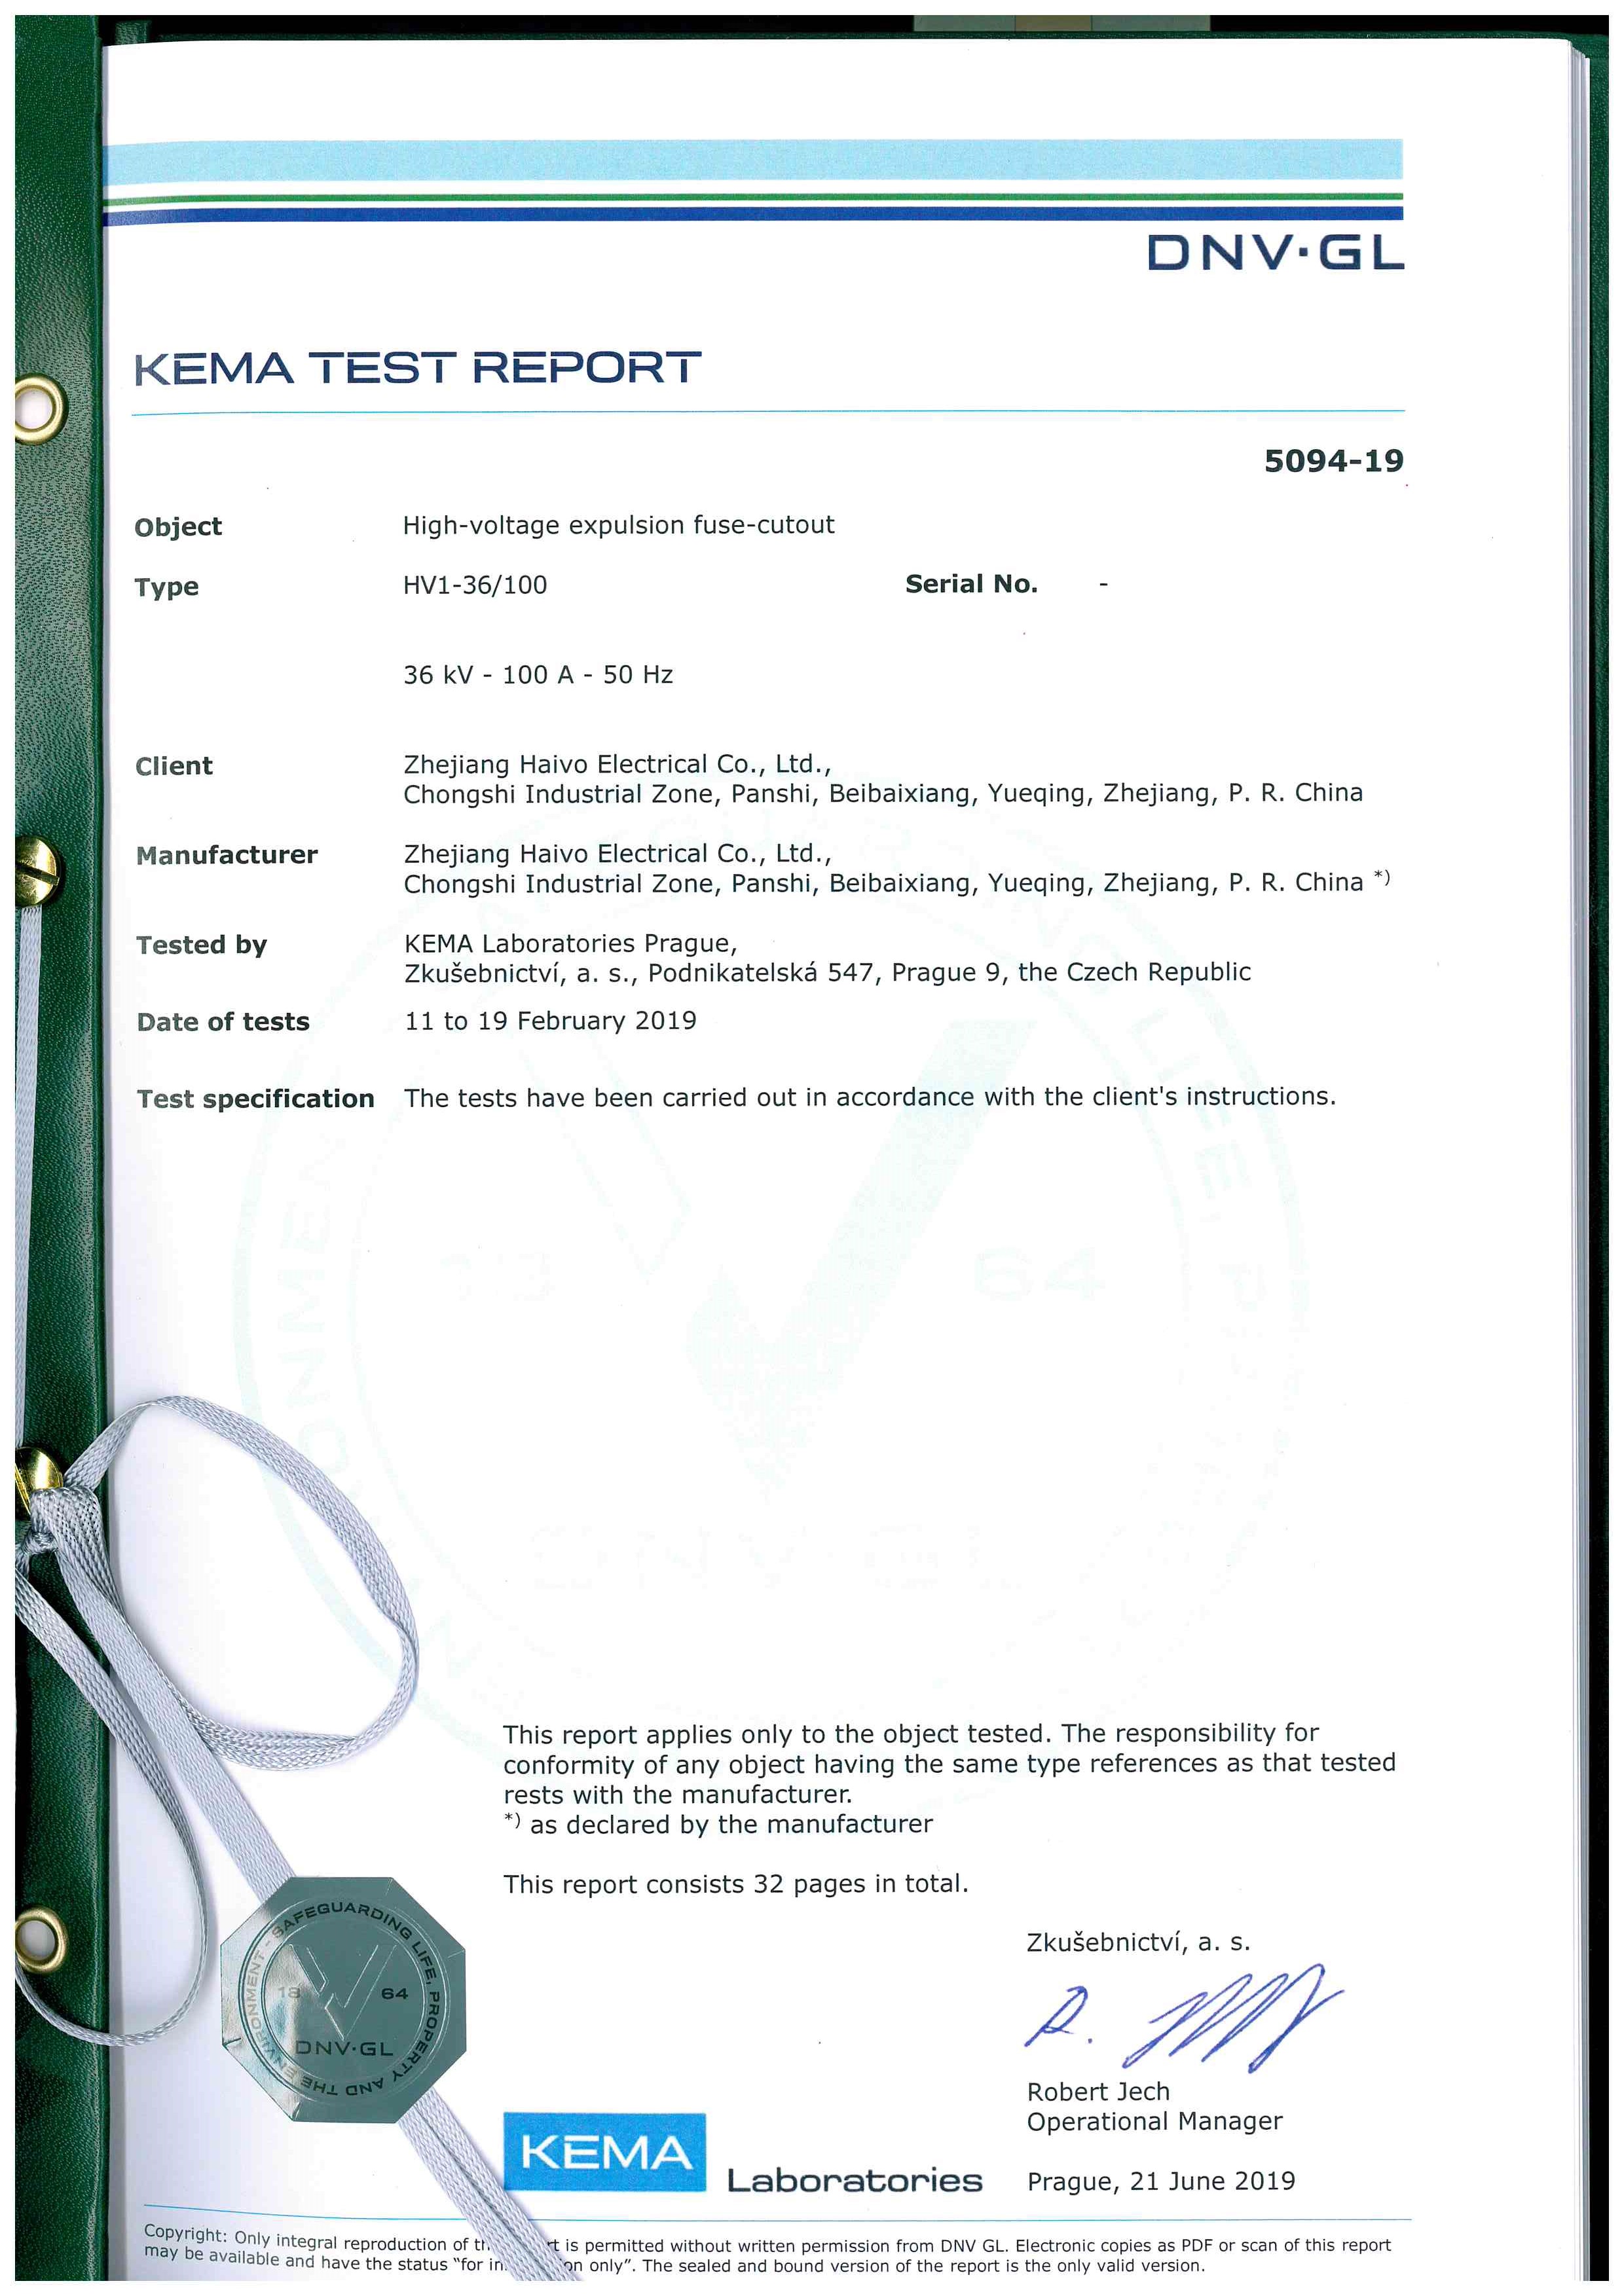 FUSE CUTOUT HV1-36-100 KEMA TEST REPORT